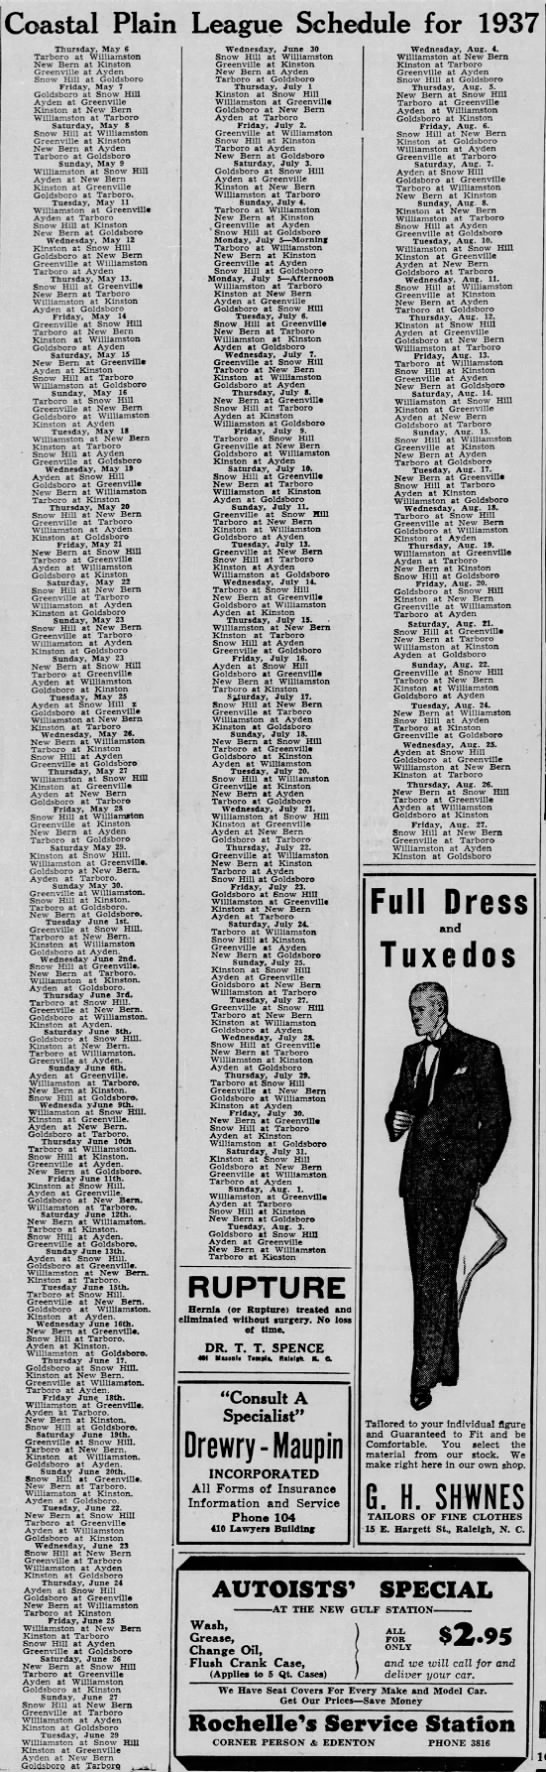 1937 Coastal Plain League schedule - 